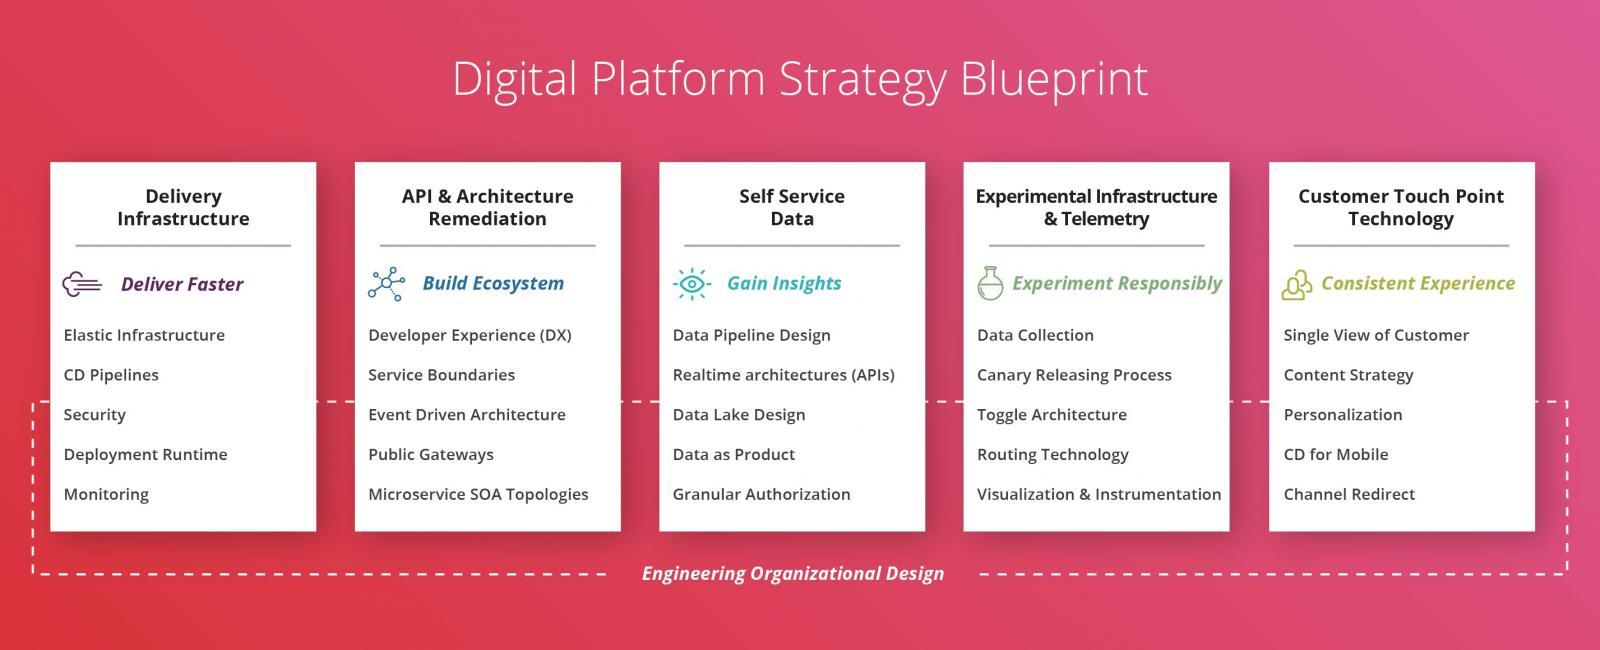 Digital Platform Strategy - a blueprint